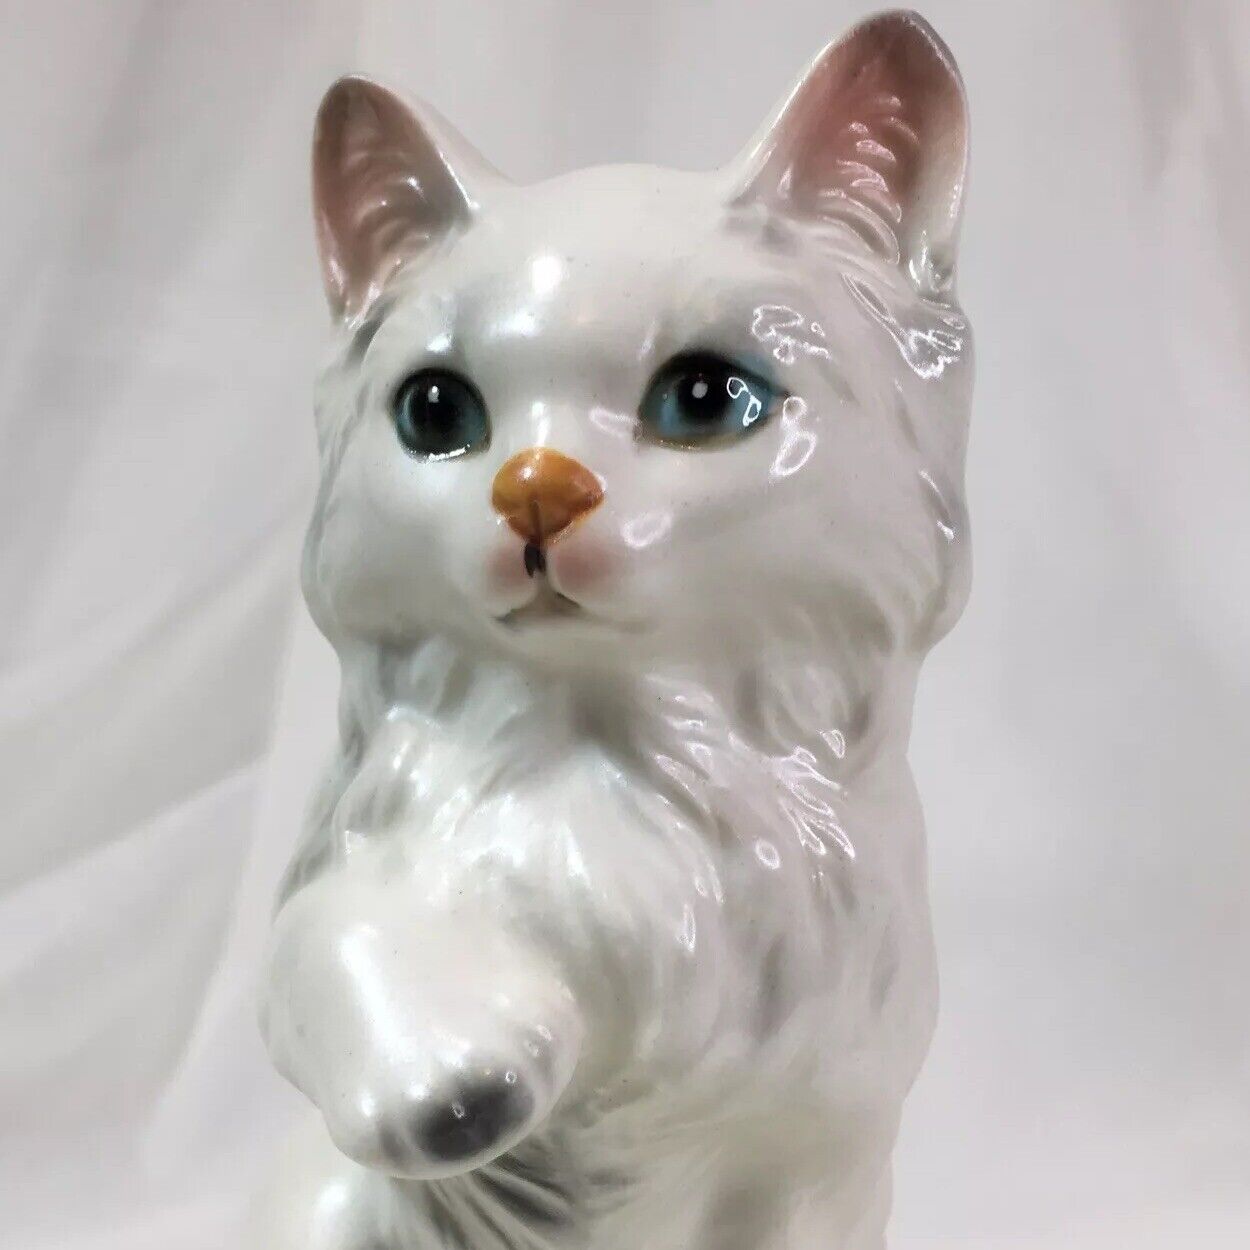 5” Vintage Kitten, Cat Figurine, Brinn’s, Japan, White, Porcelain, Collectible❤️